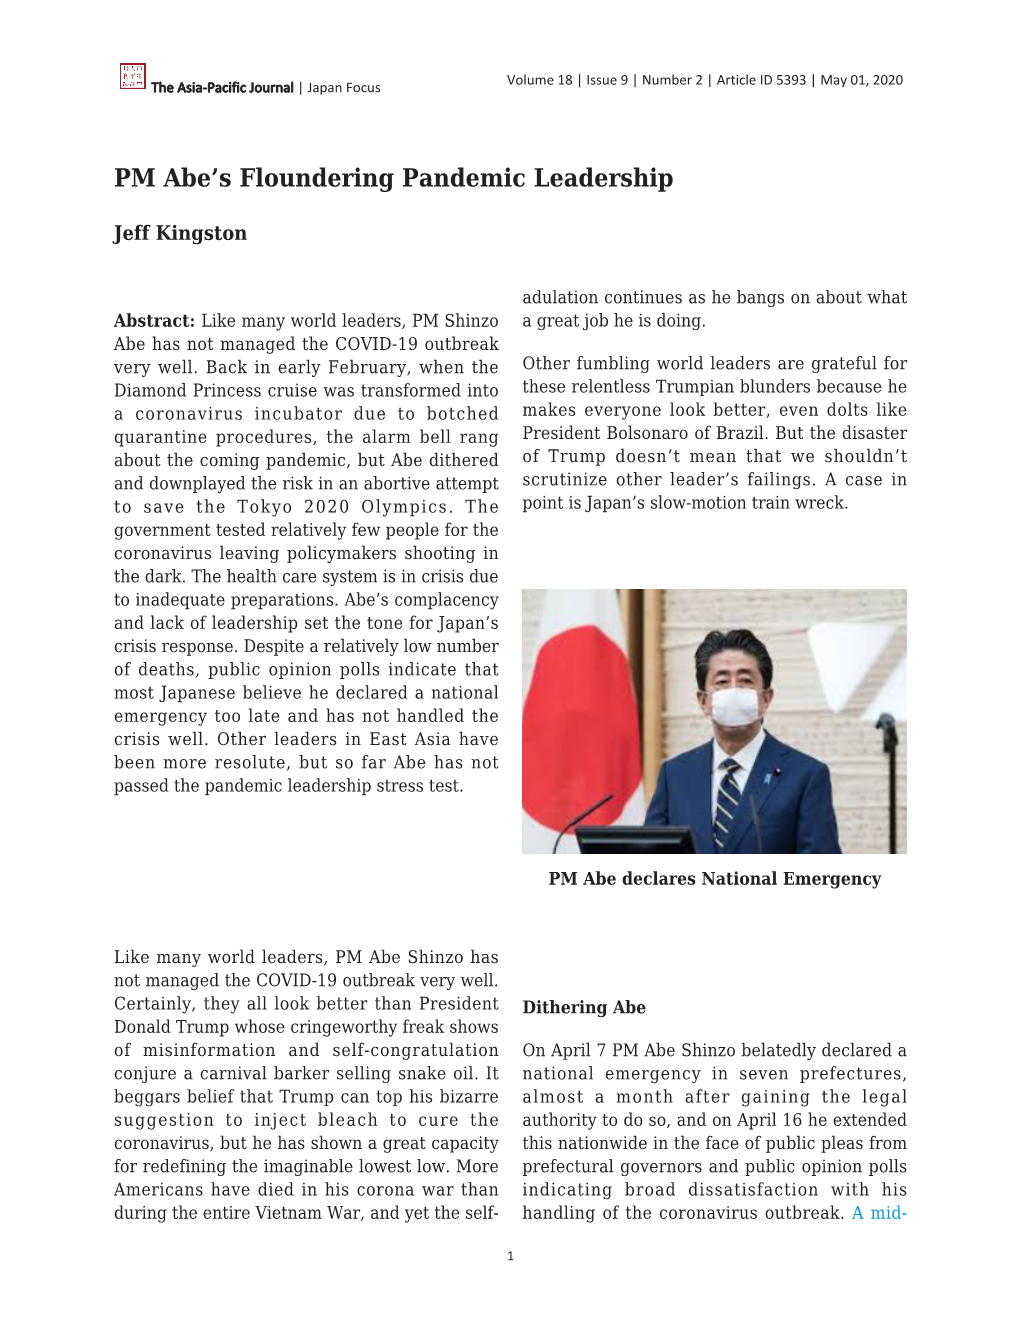 PM Abe's Floundering Pandemic Leadership